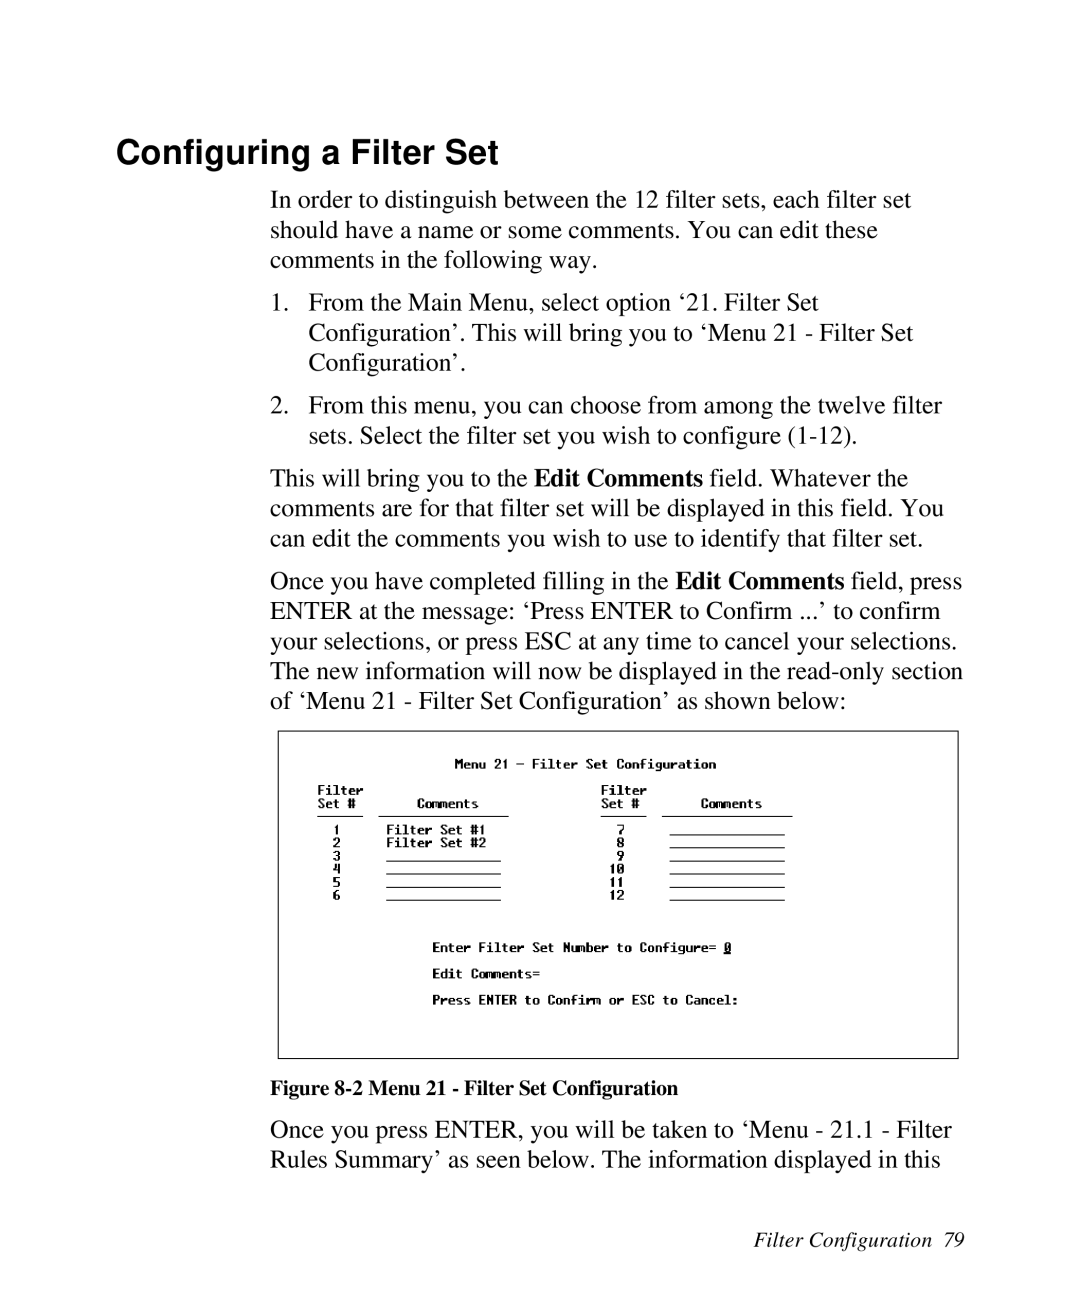 ZyXEL Communications Prestige100 user manual Configuring a Filter Set, 2 Menu 21 - Filter Set Configuration 